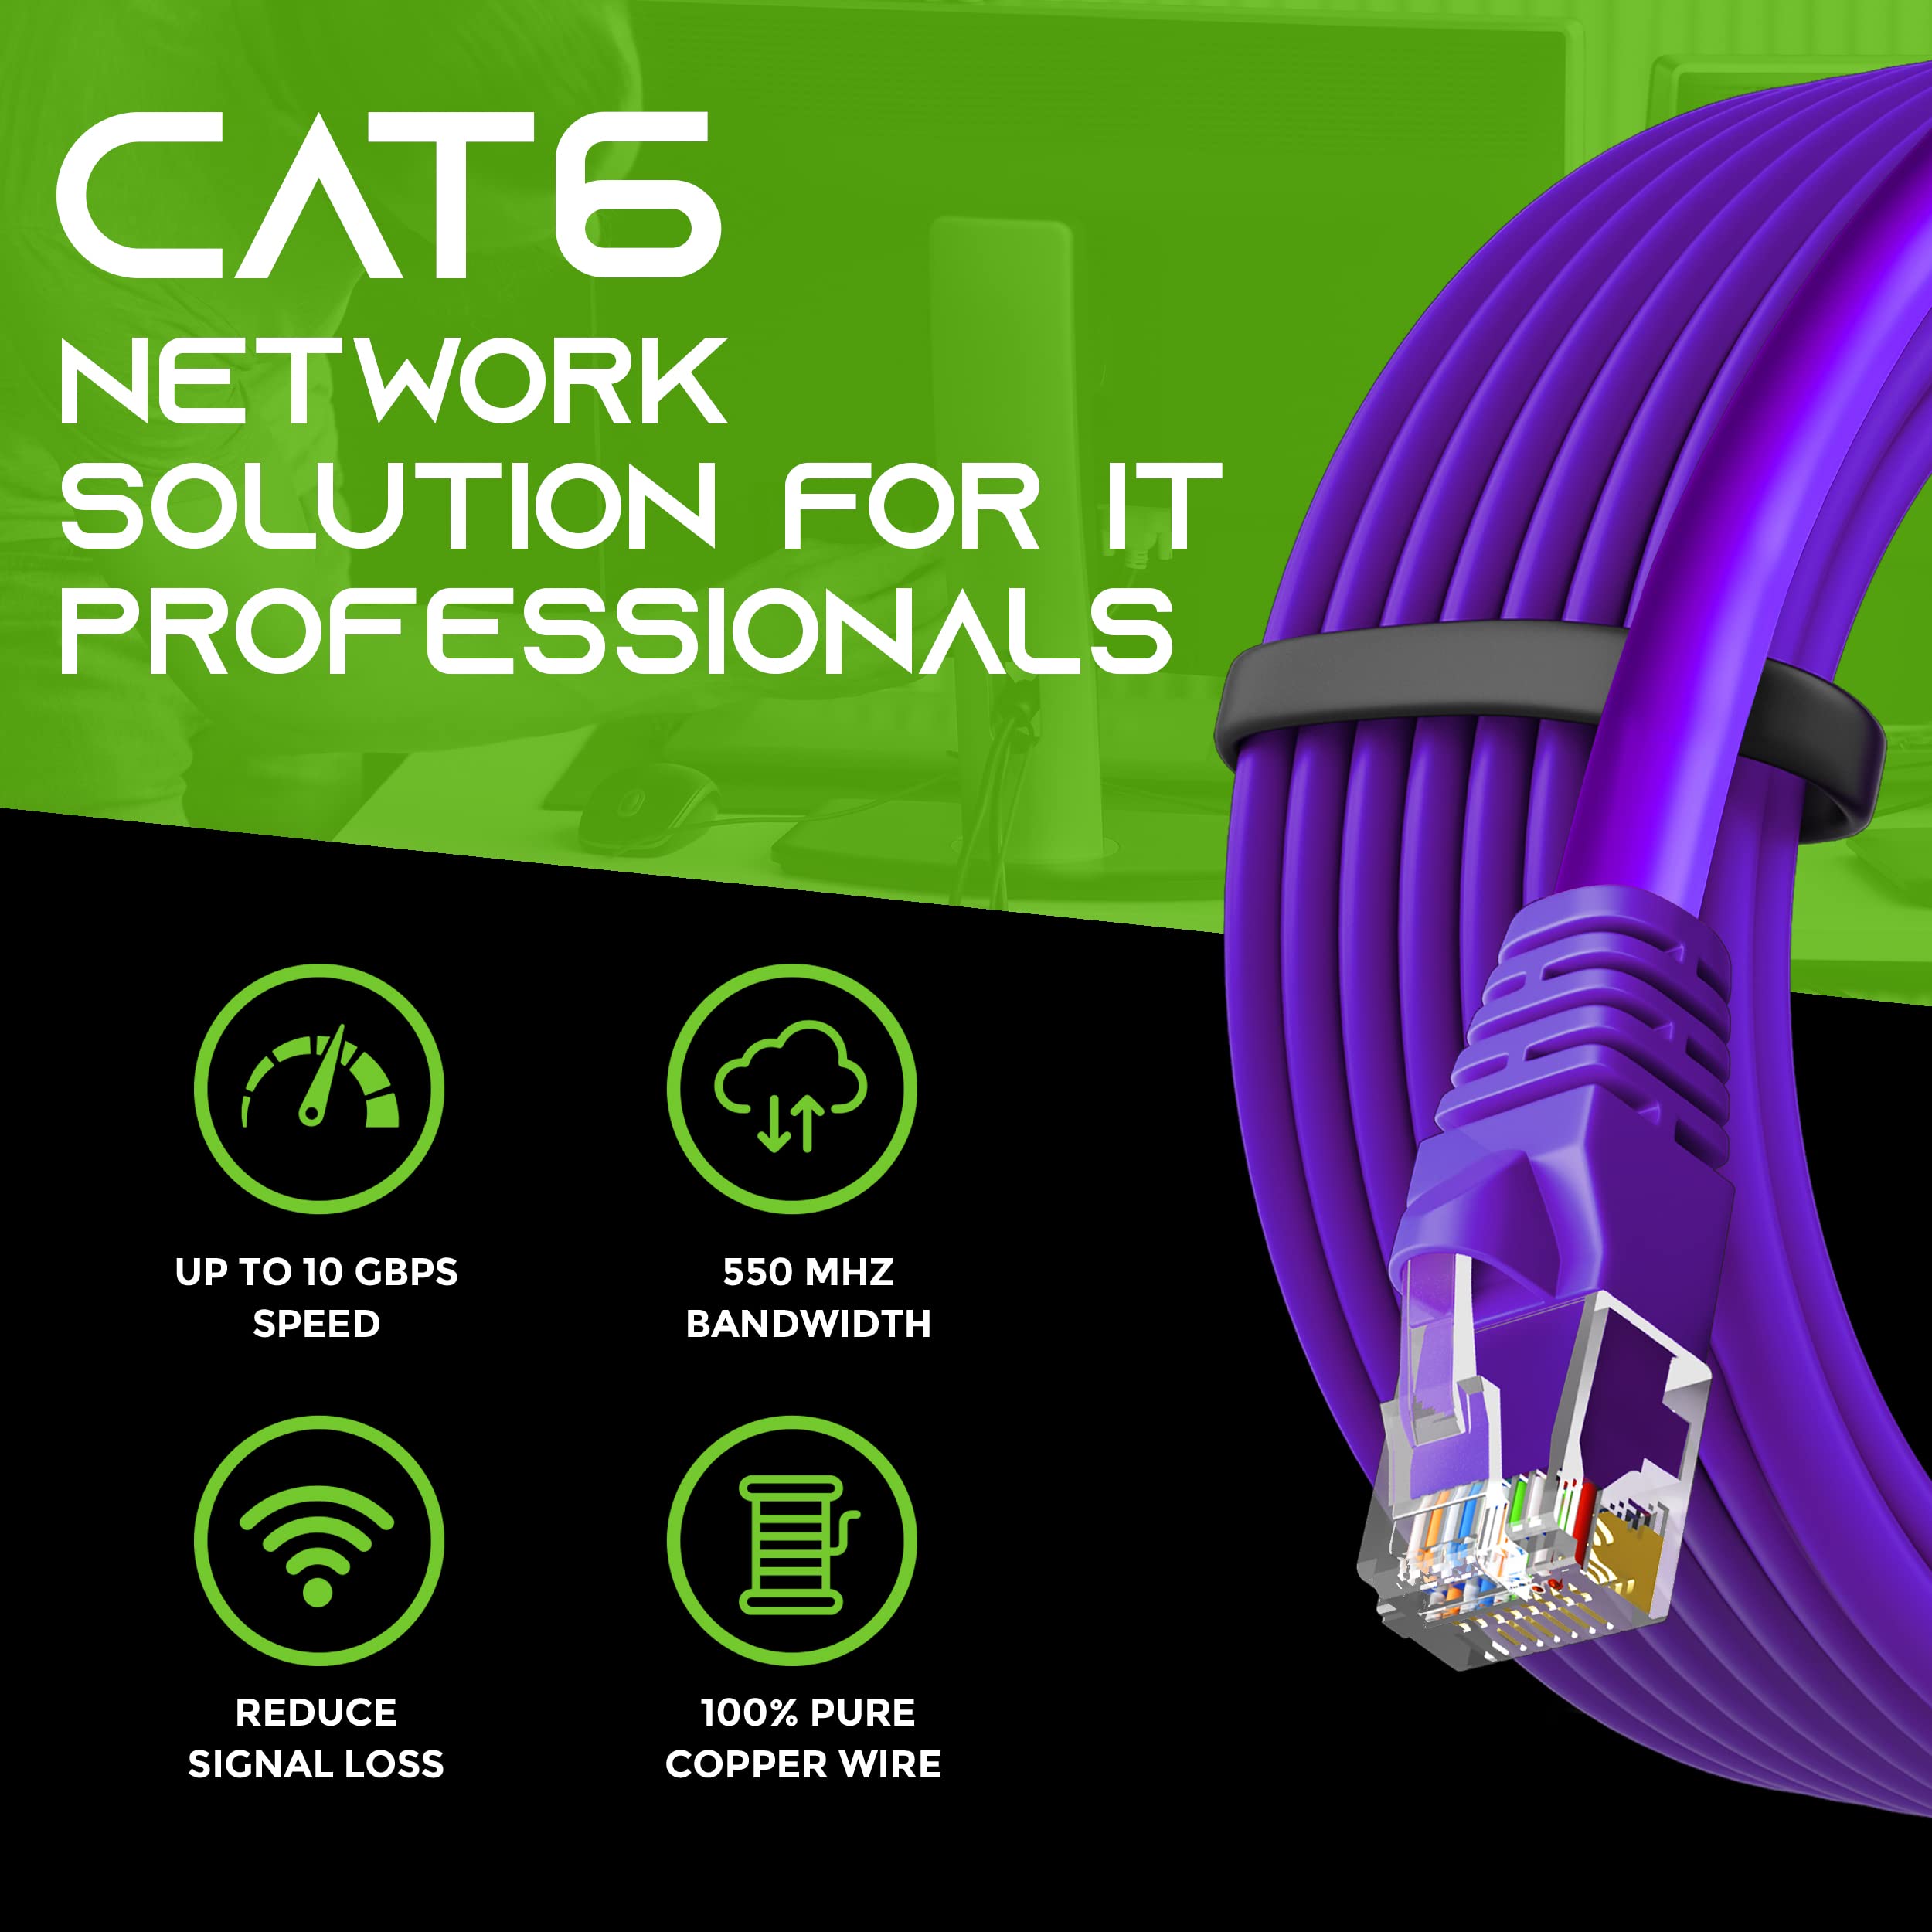 GearIT Cat 6 Ethernet Cable 1 ft (20-Pack) - Cat6 Patch Cable, Cat 6 Patch Cable, Cat6 Cable, Cat 6 Cable, Cat6 Ethernet Cable, Network Cable, Internet Cable - Purple 1 Foot